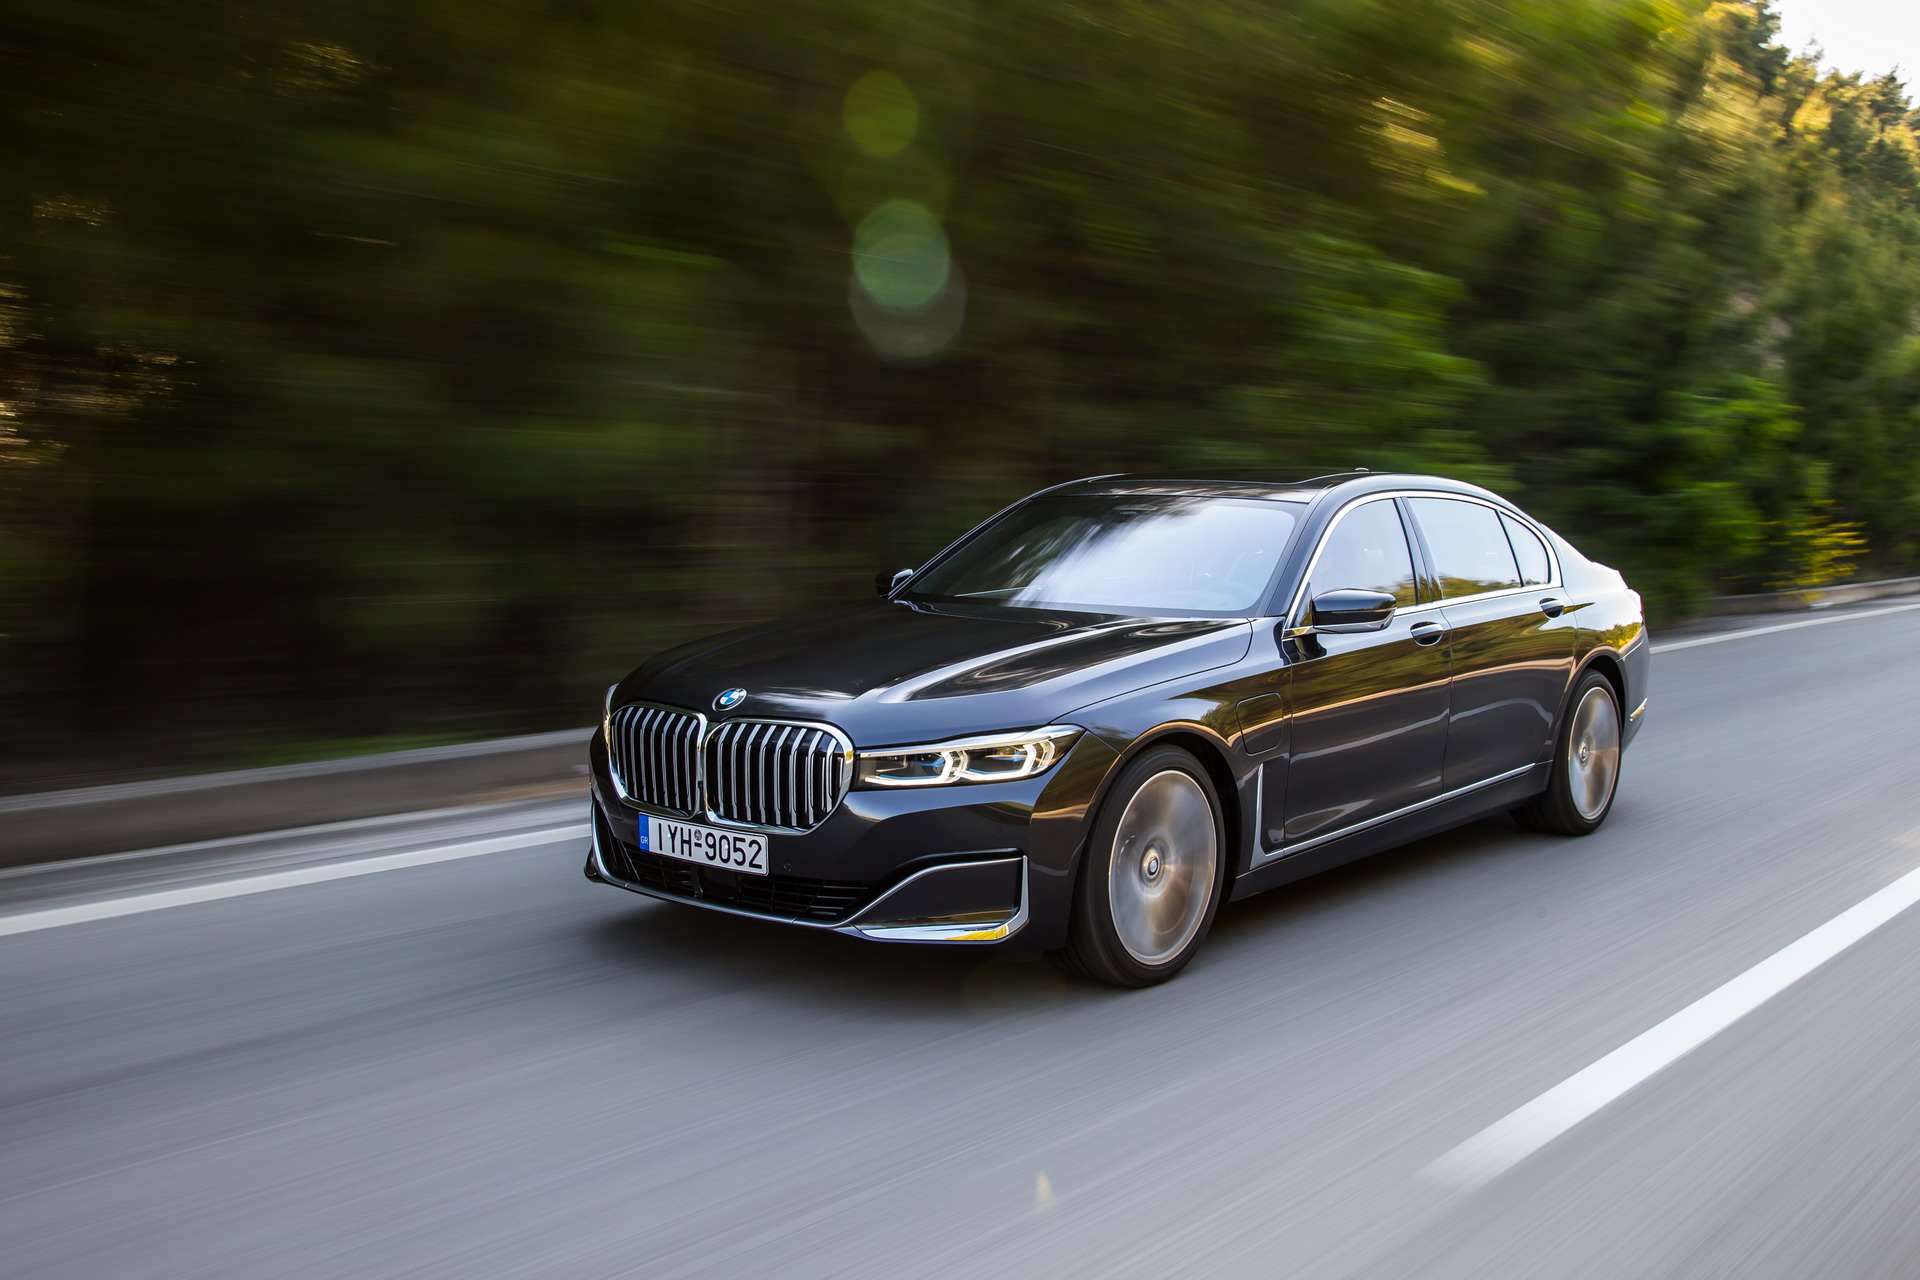 New Spy Shots of BMW's i7 Electric Sedan - The Next Avenue